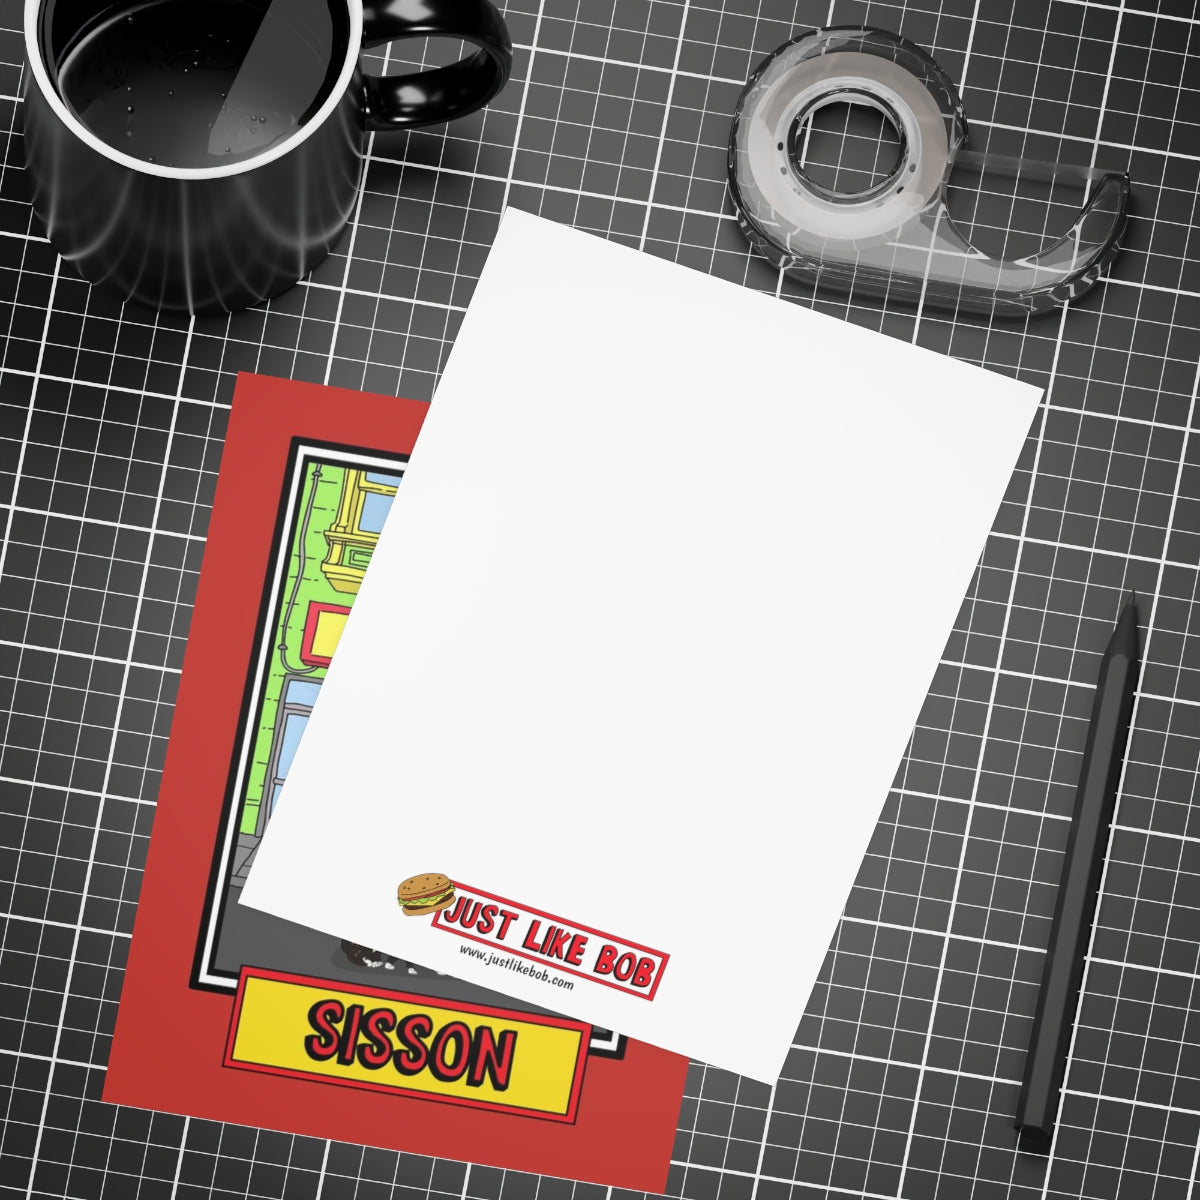 Personalized Greeting Card Bundles (10, 30, 50 pcs) - Just Like Bob Bob's Burgers